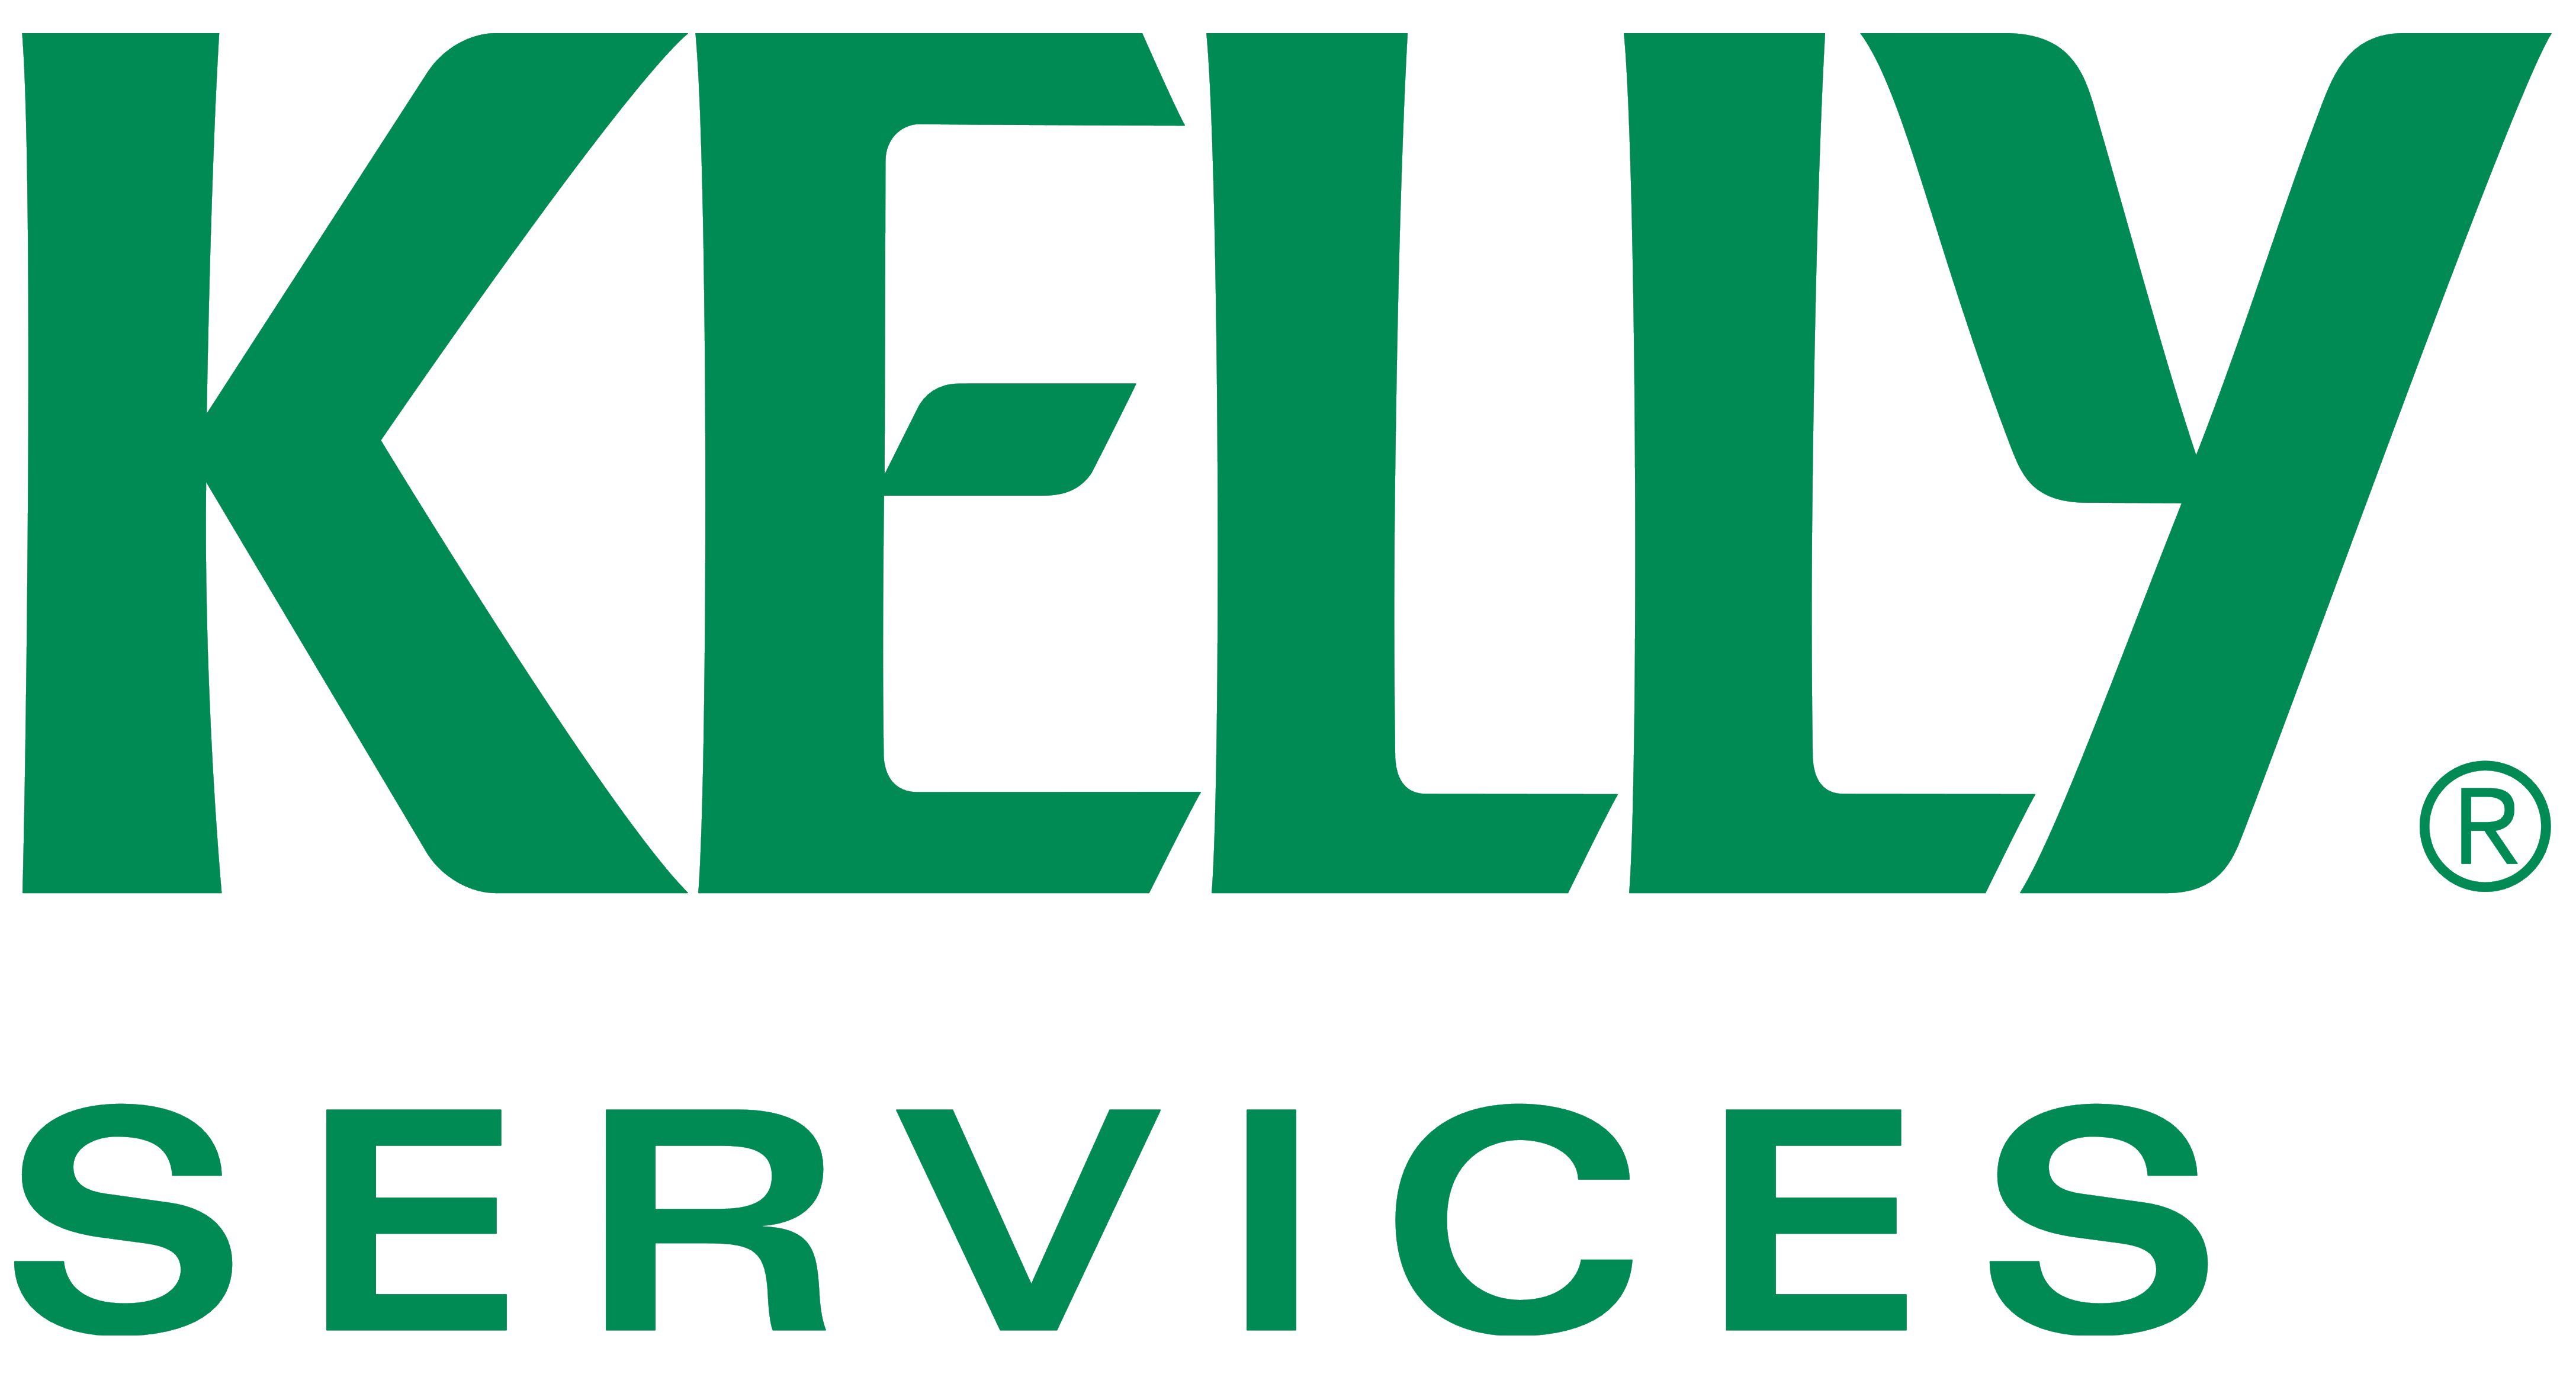 Kelly Services logo, logotype